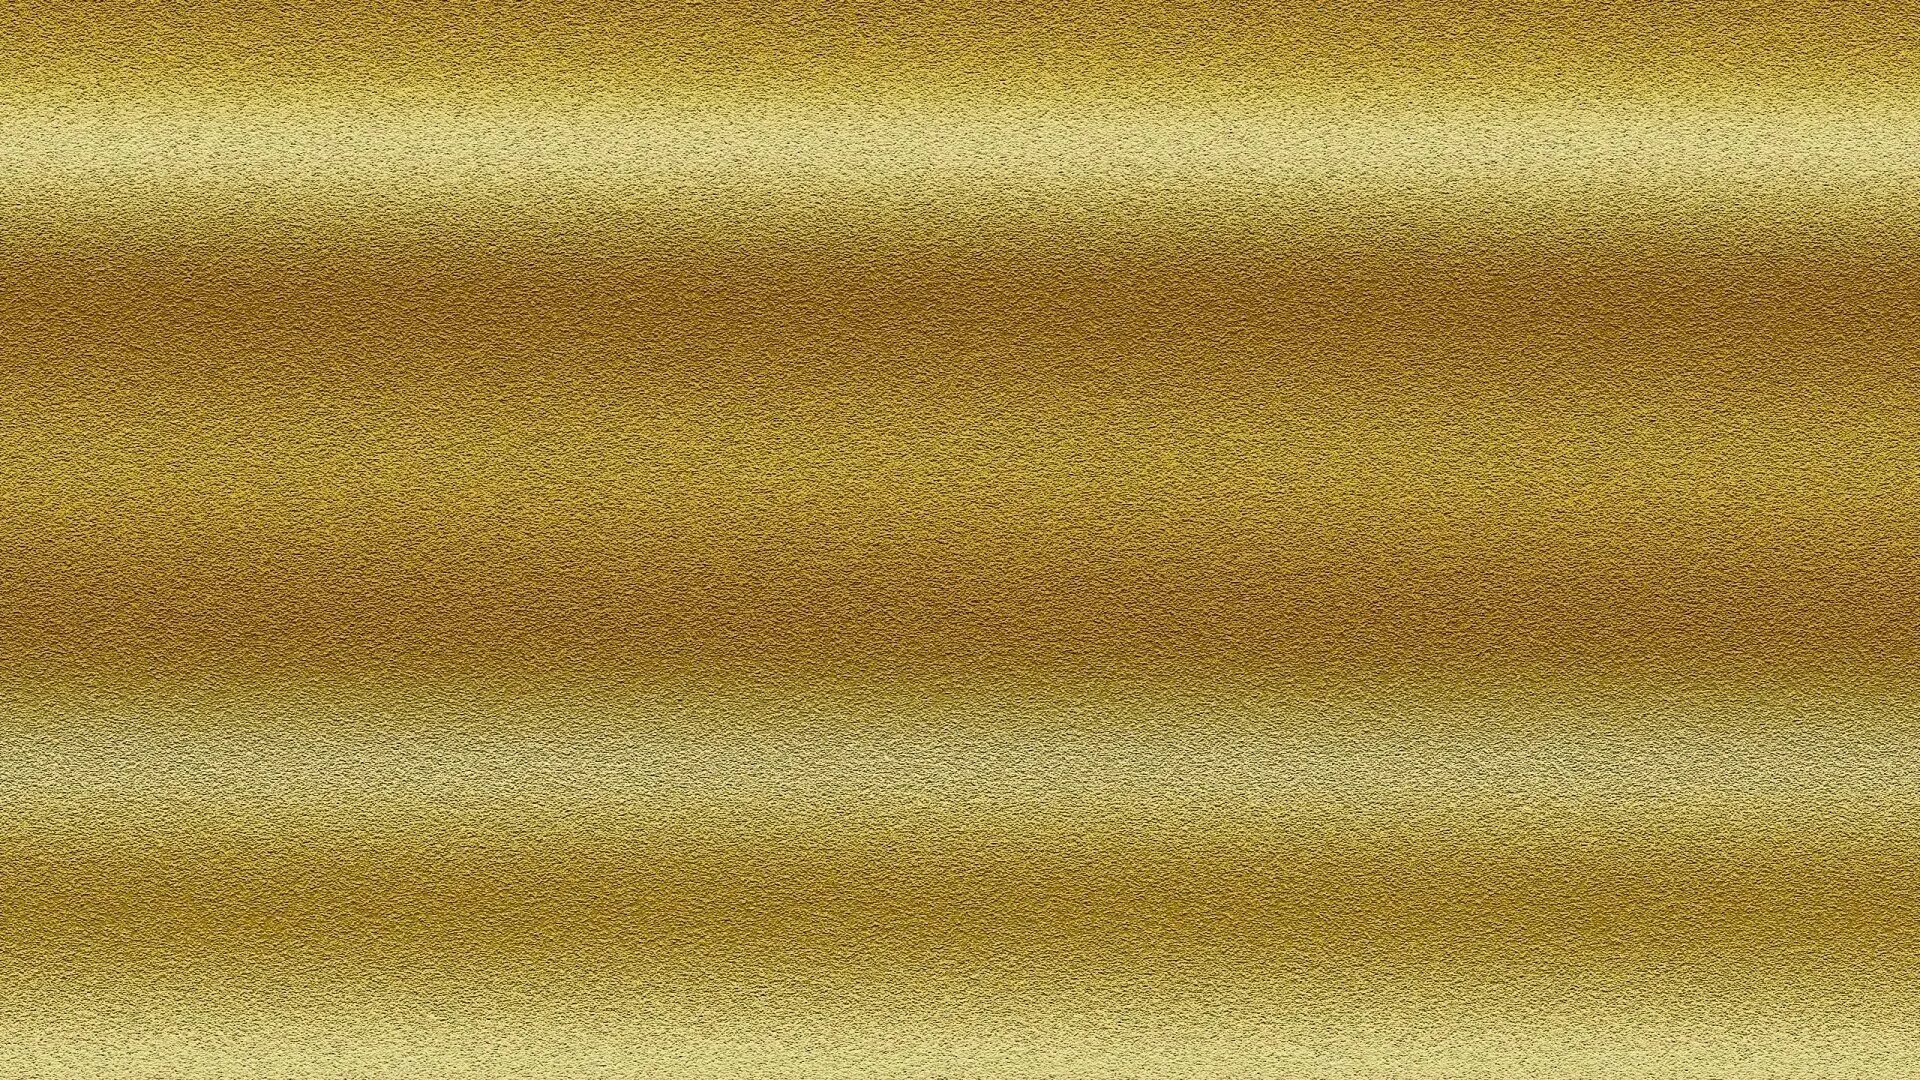 Metallic gold. Золото металлик lx19240. Золото металлик d2111. Золото фон. Золото текстура.